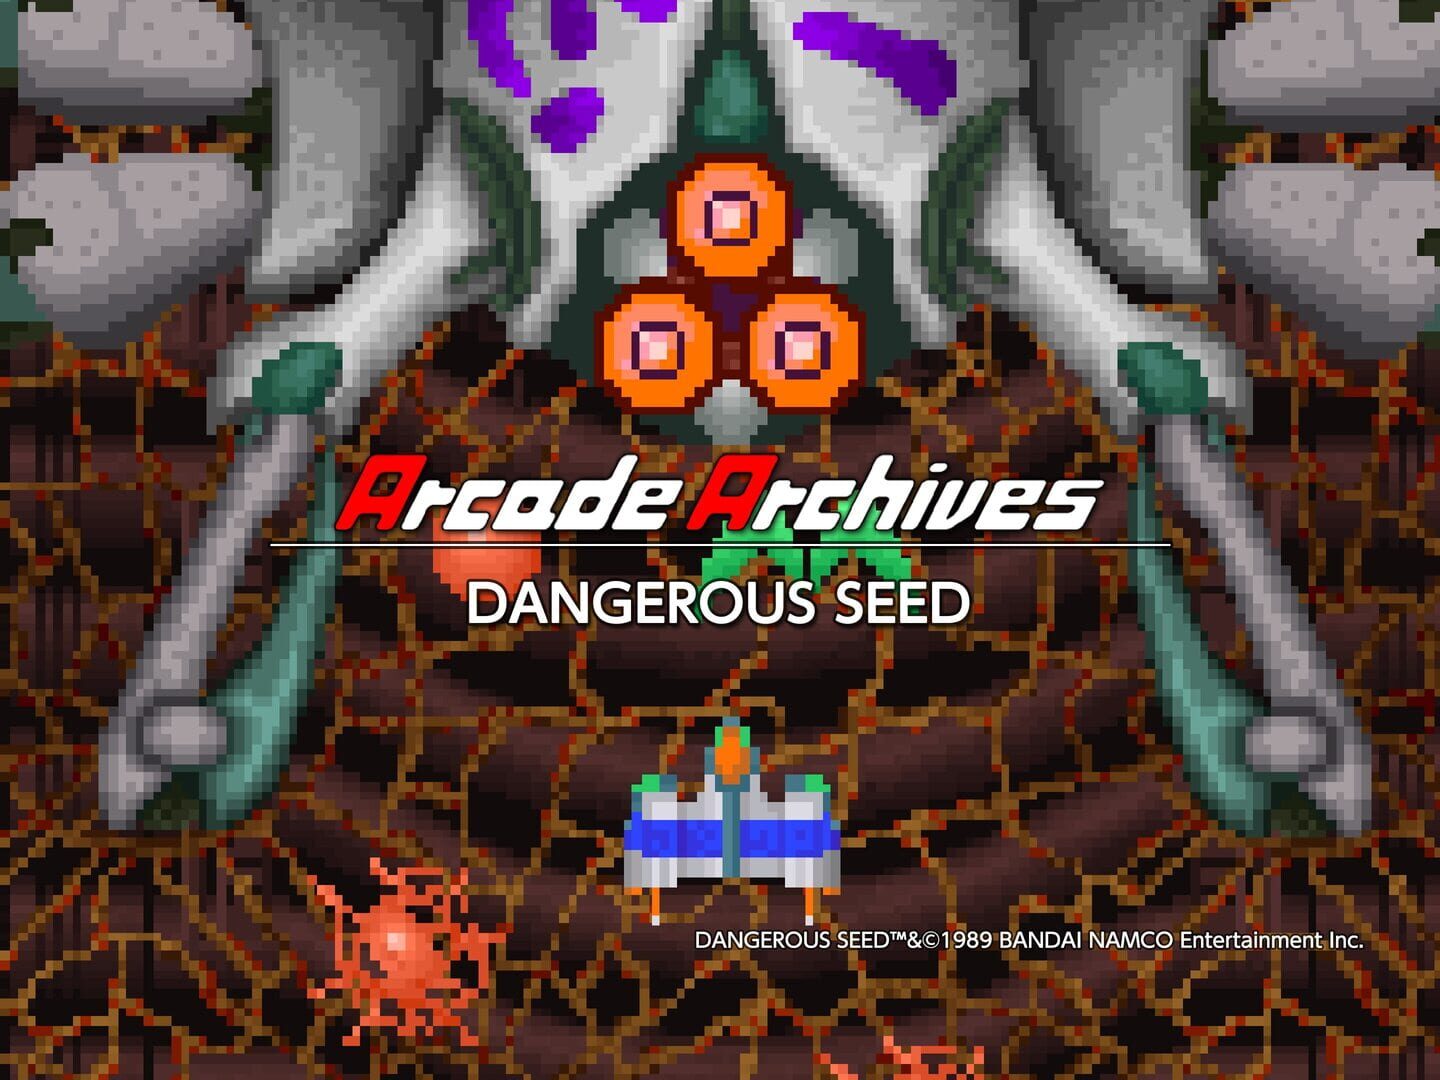 Arcade Archives: Dangerous Seed artwork